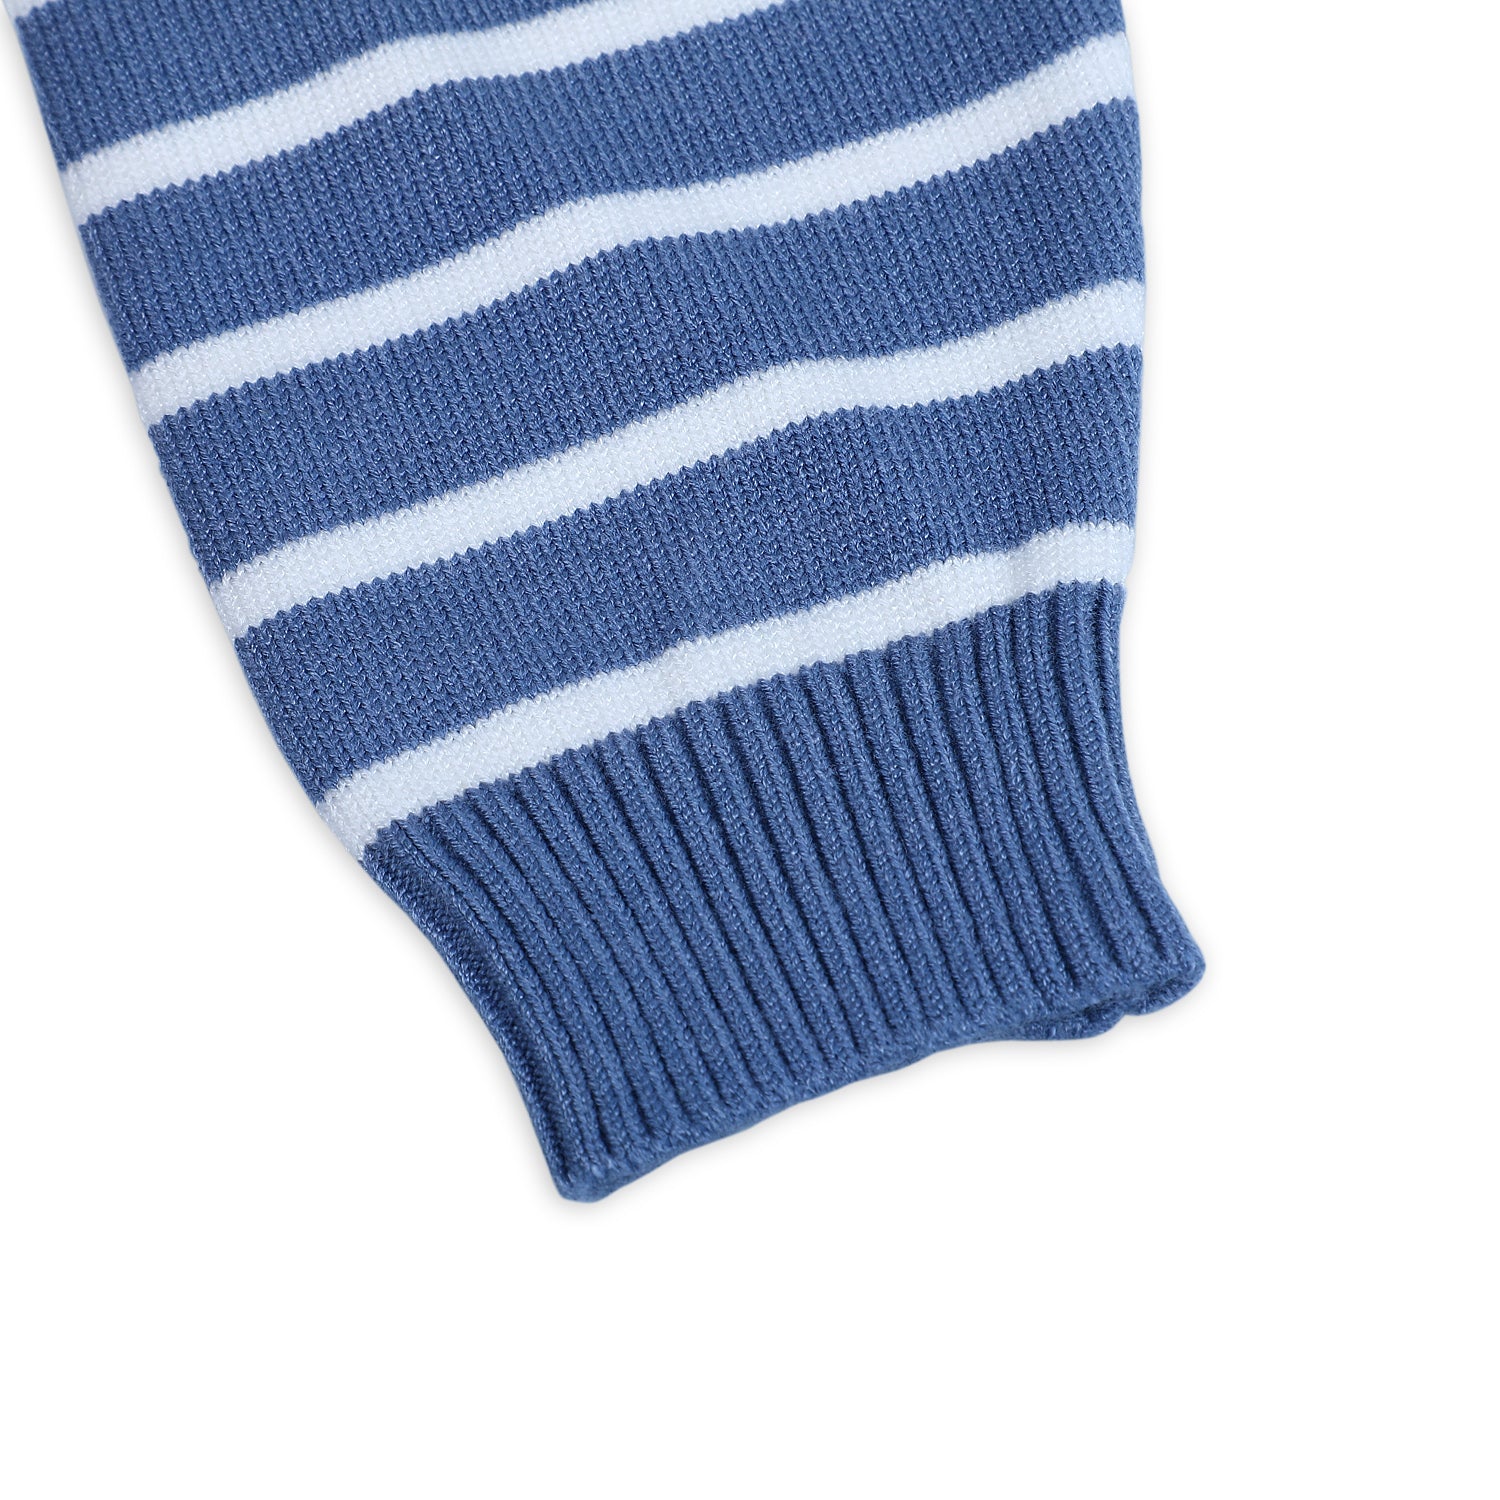 Dashing Dino Striped Premium Full Sleeves Knitted Sweater - Blue - Baby Moo